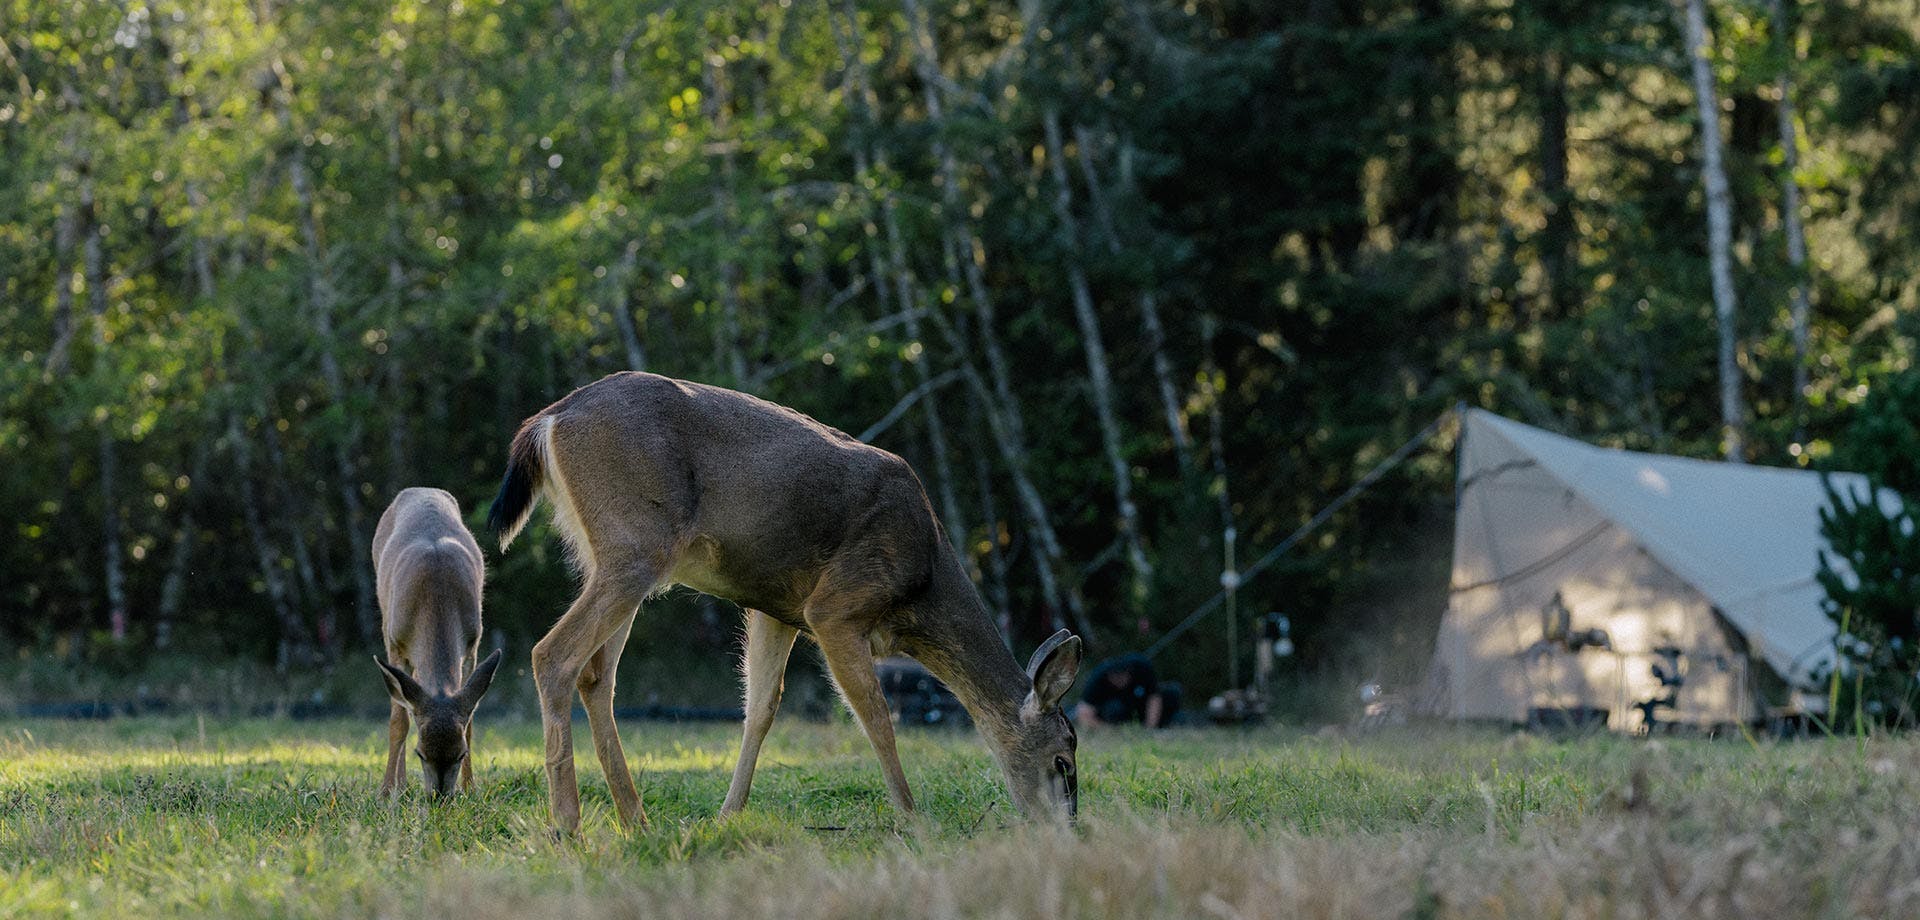 deer in field